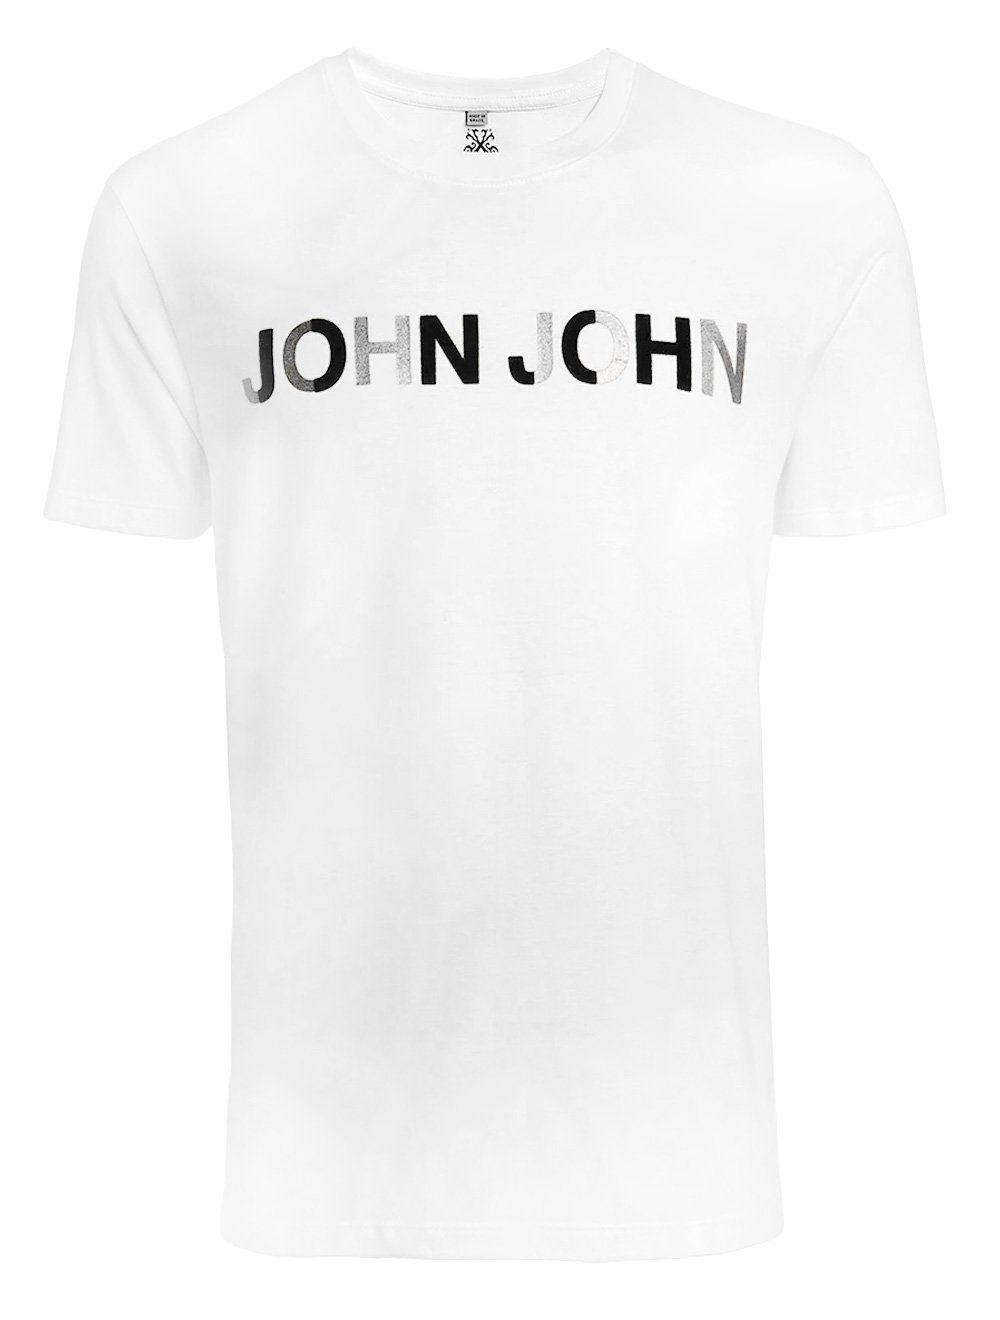 Camiseta john john masculina logo colorfull branca